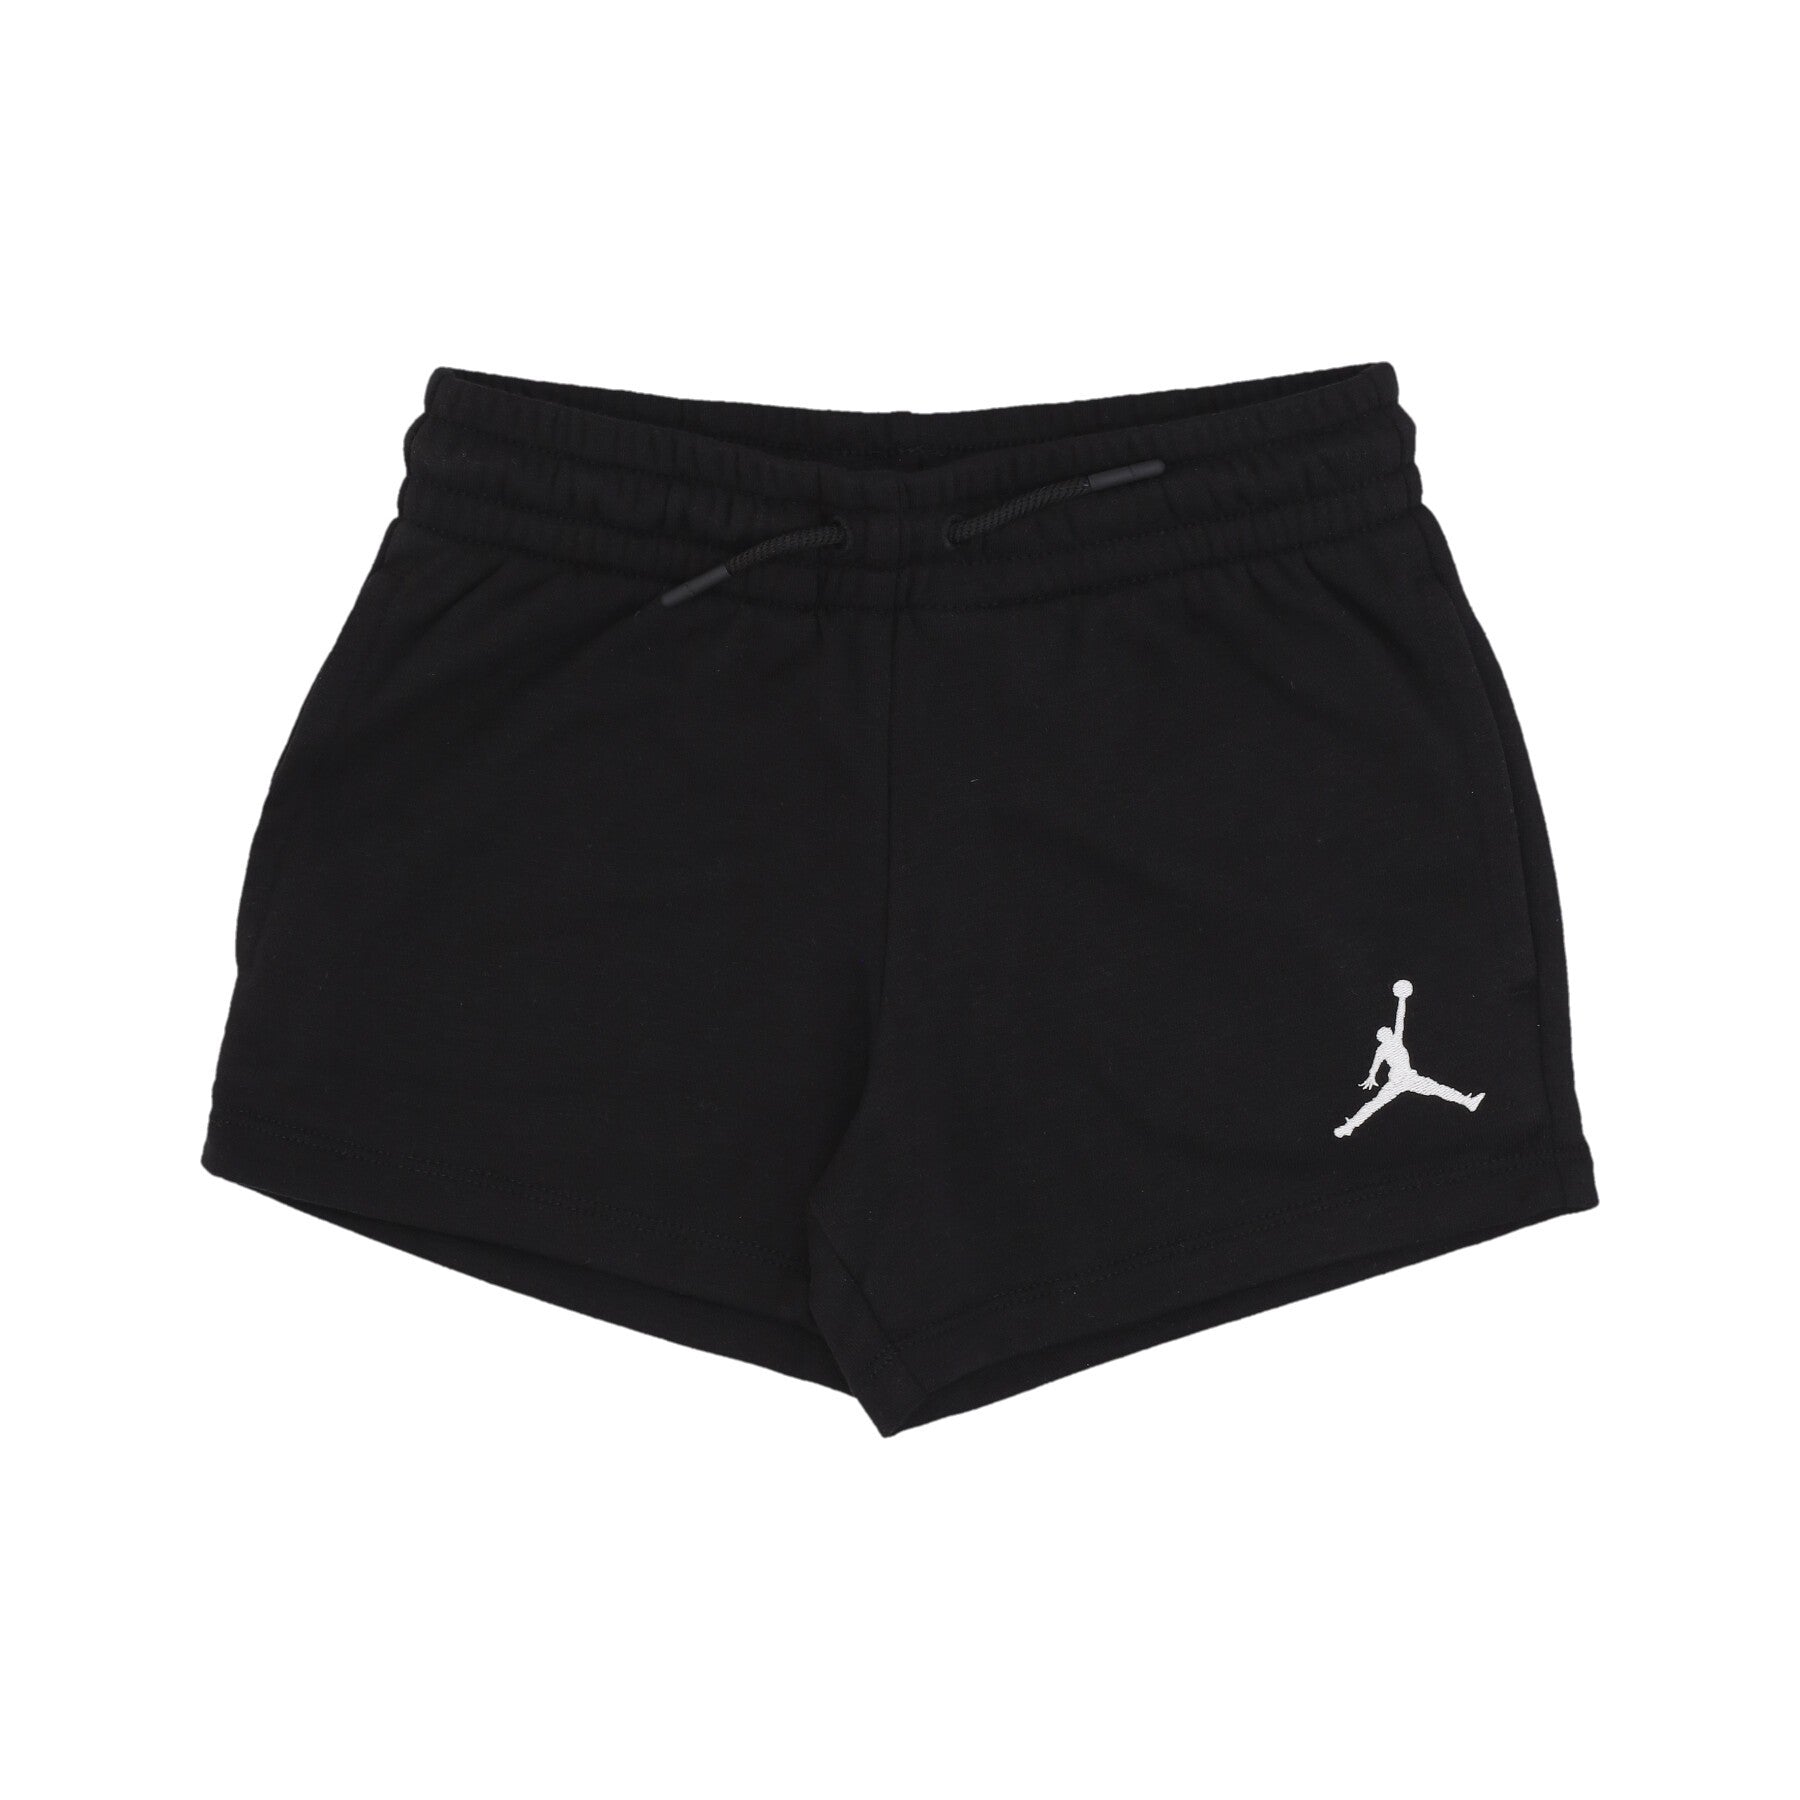 Jordan, Pantaloncino Ragazza Essential Shorts, Black